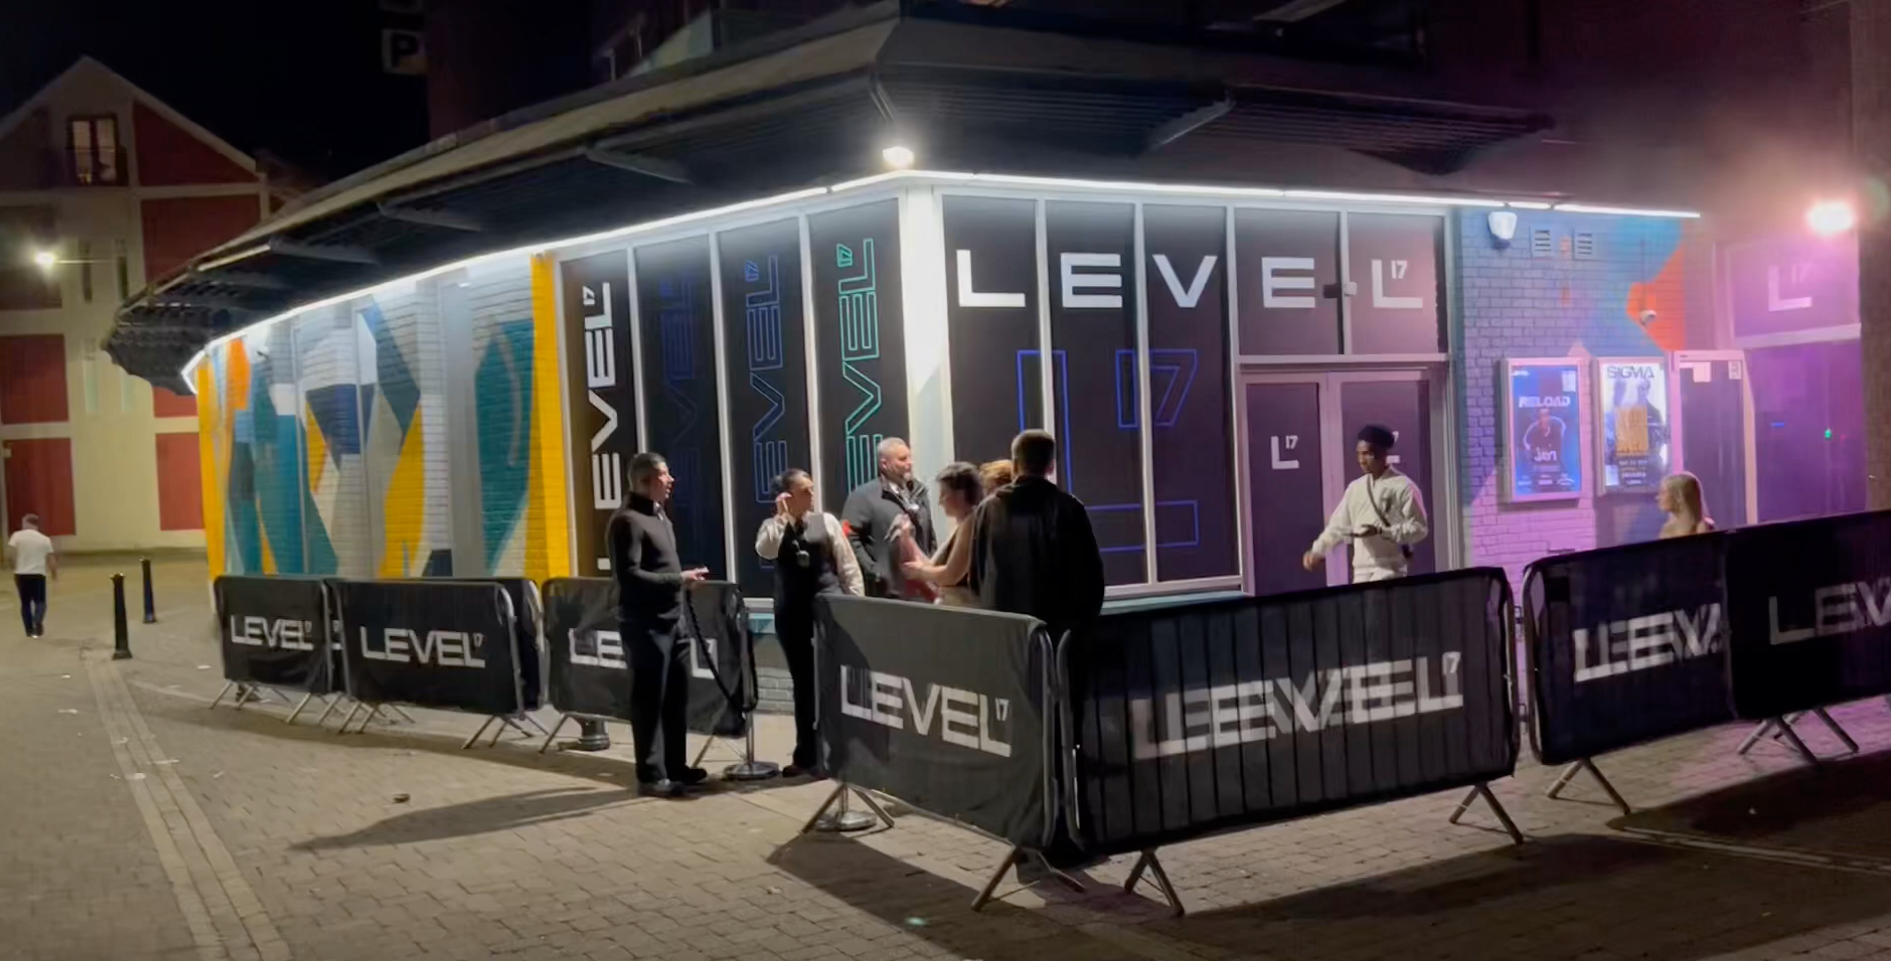 Level 17 nightclub Swansea